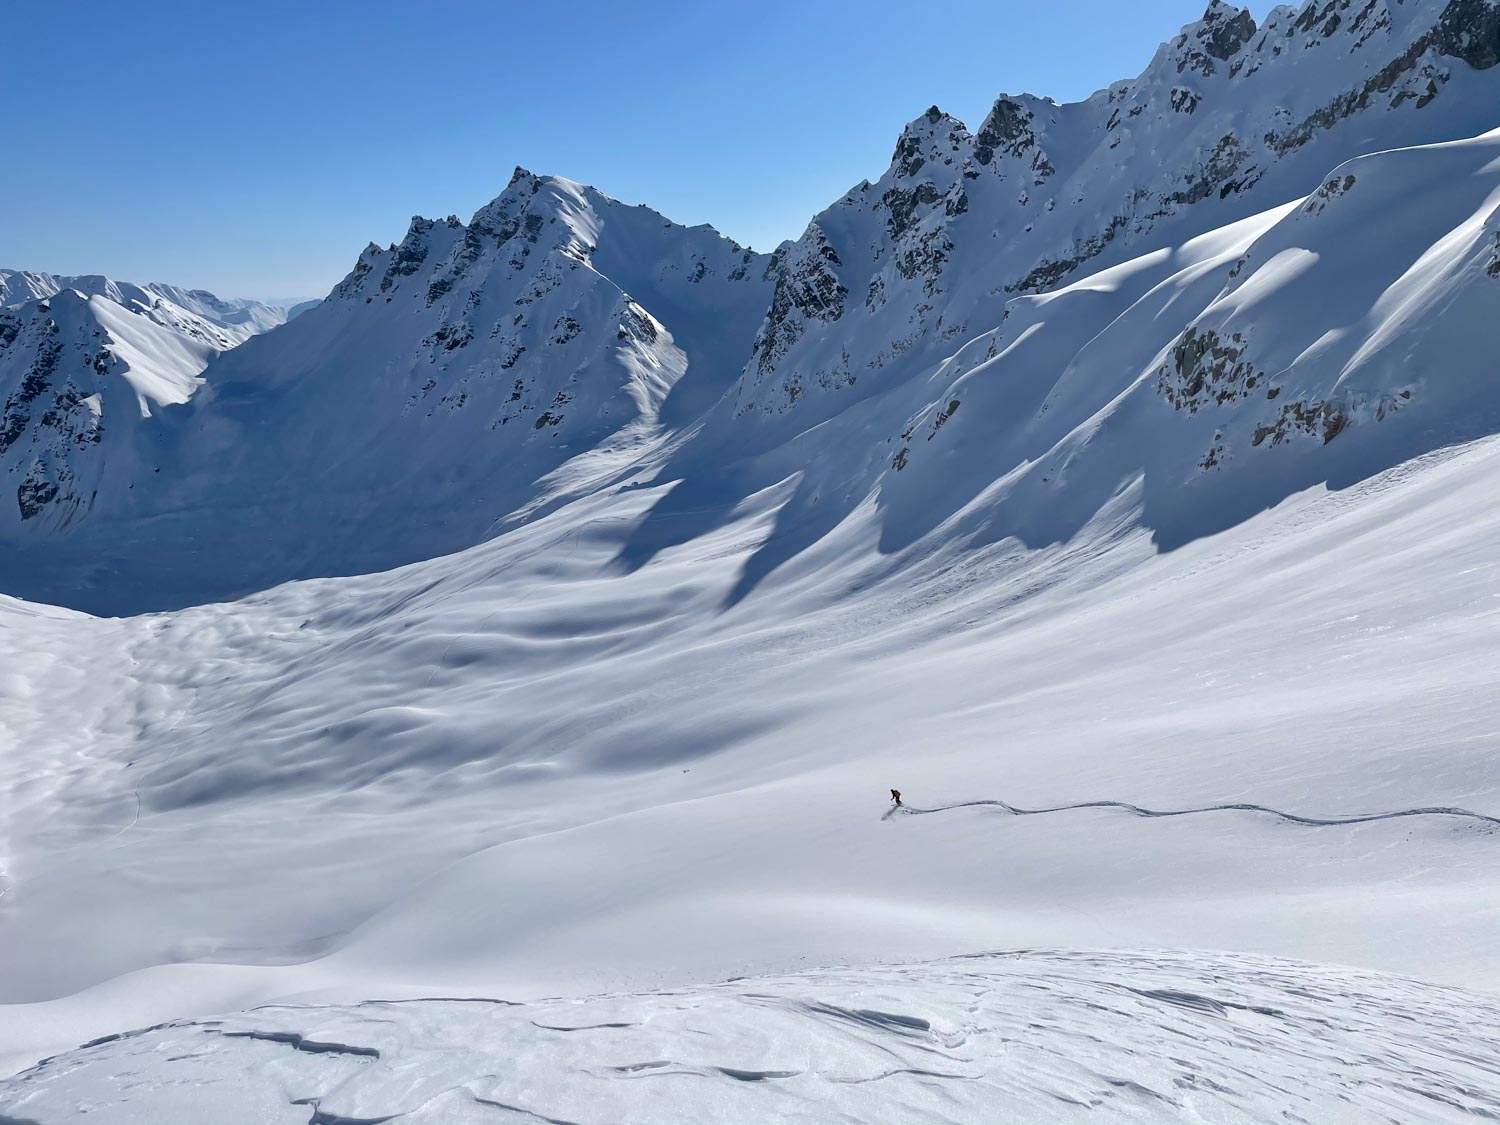 A skier makes tracks on a snowy mountainside